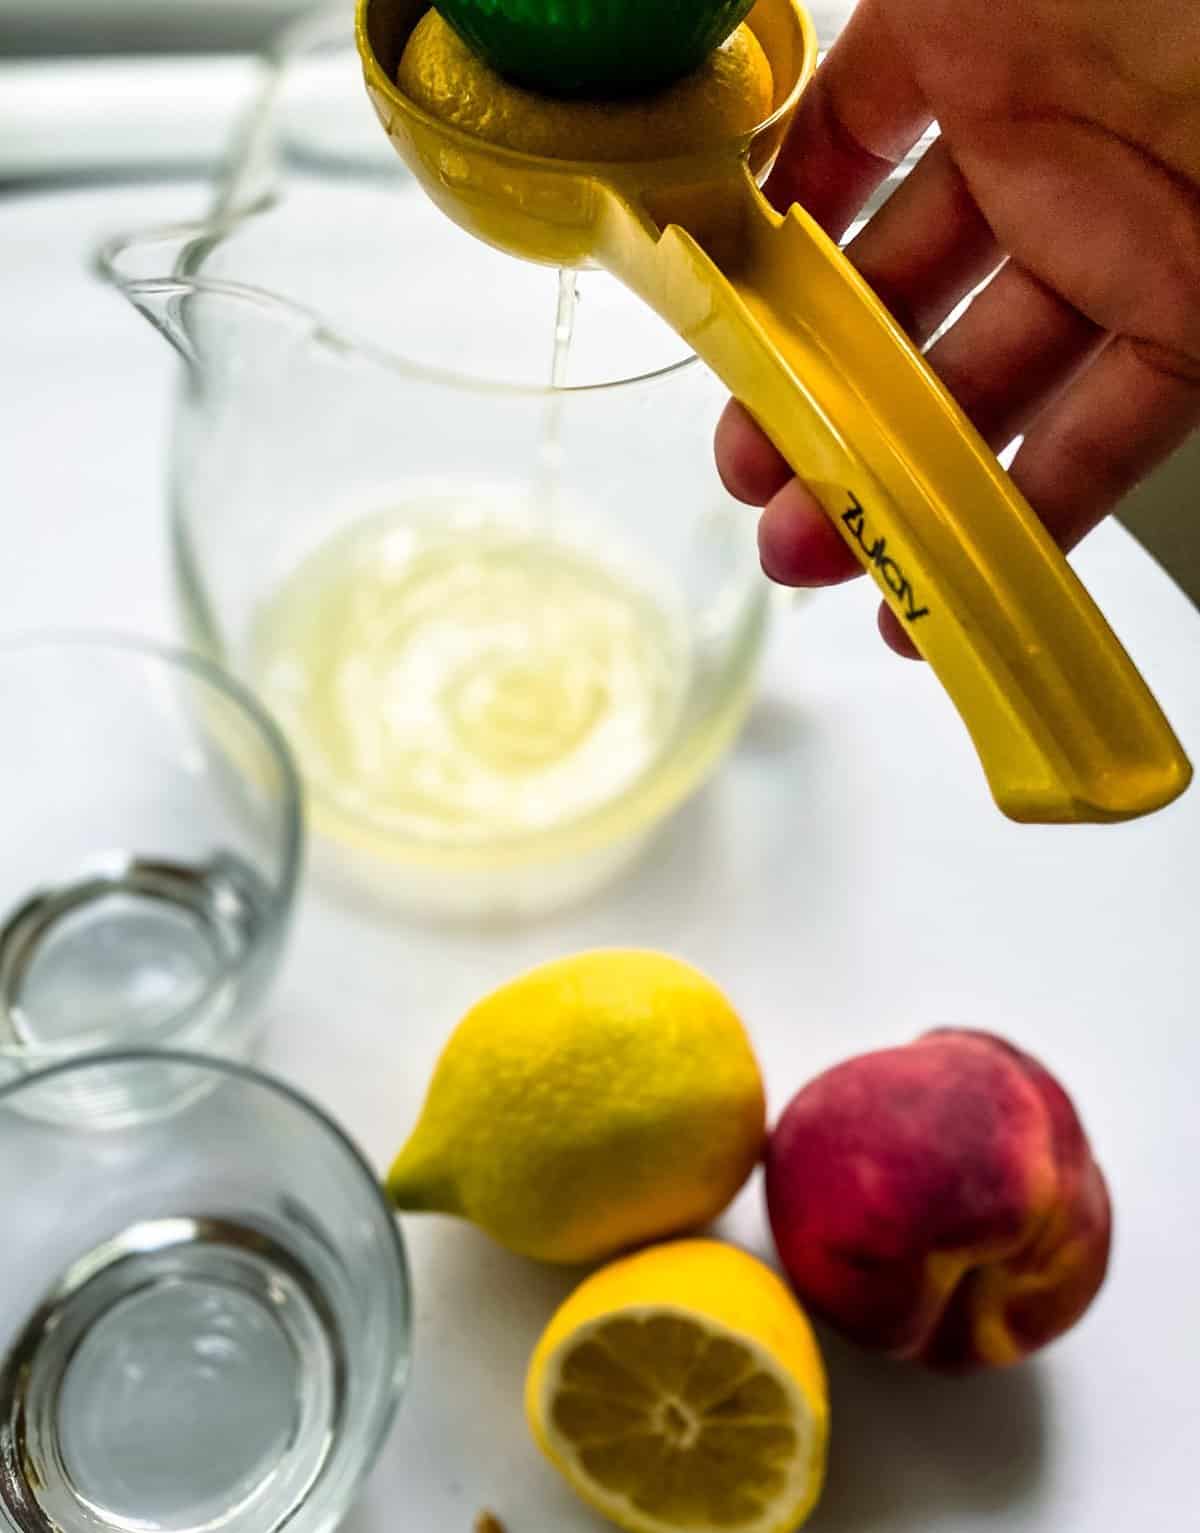 Squeezing lemon juice into a glass pitcher